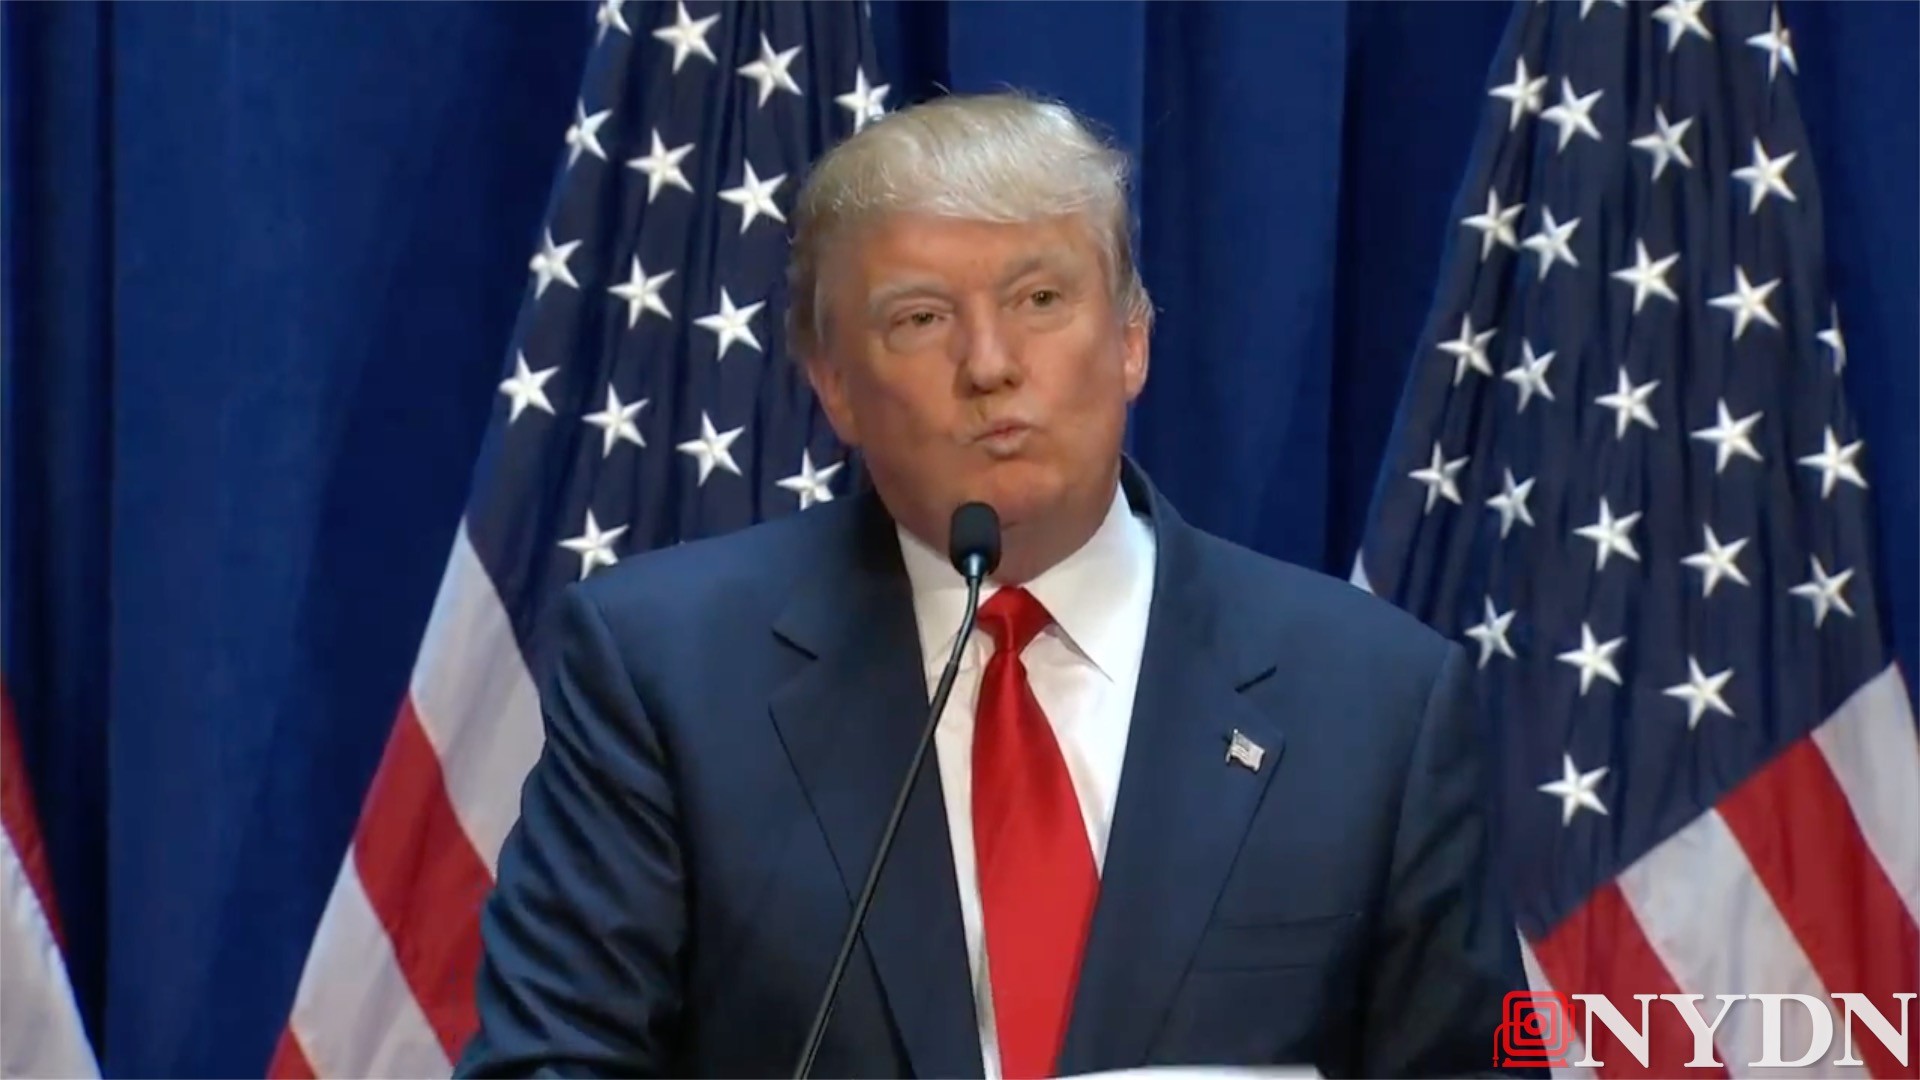 Highlights from Donald Trump running for President speech